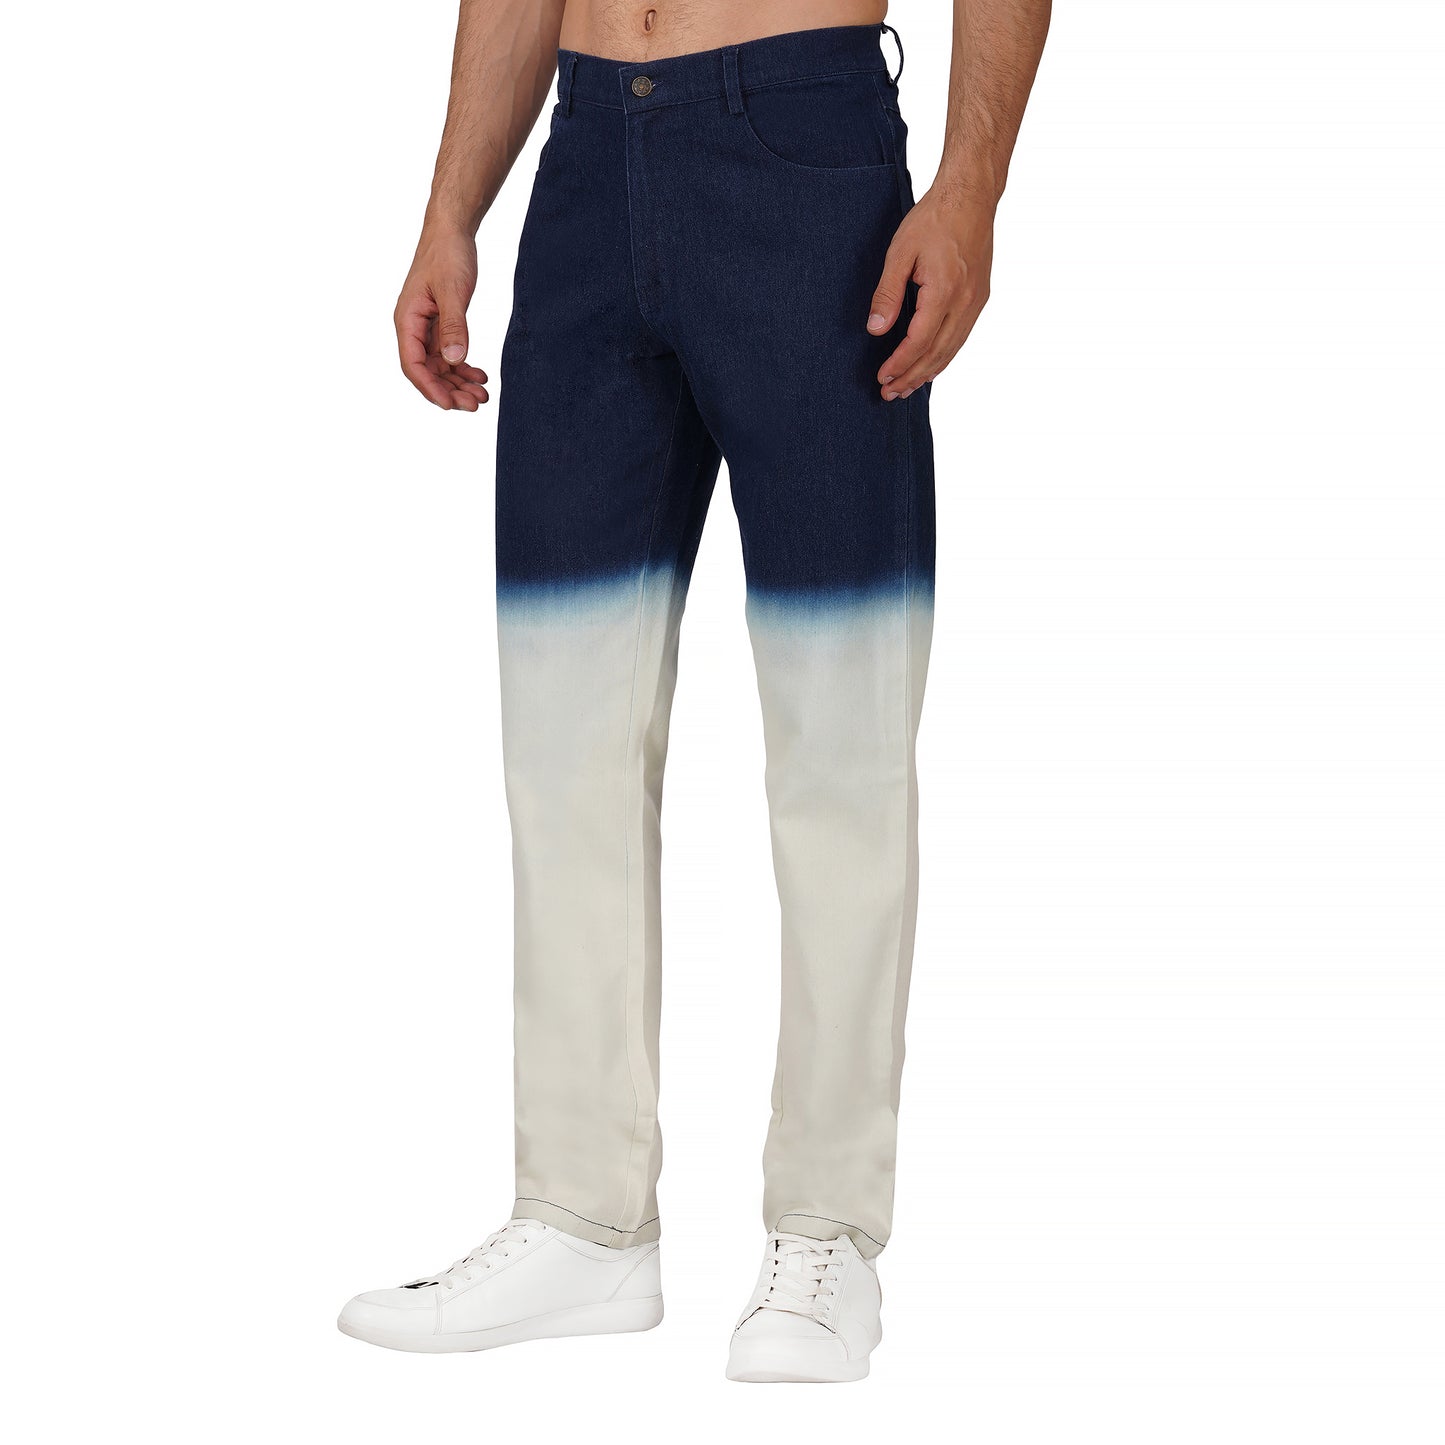 SLAY. Men's Blue Ombre Denim Jacket & Jeans Co-ord Set